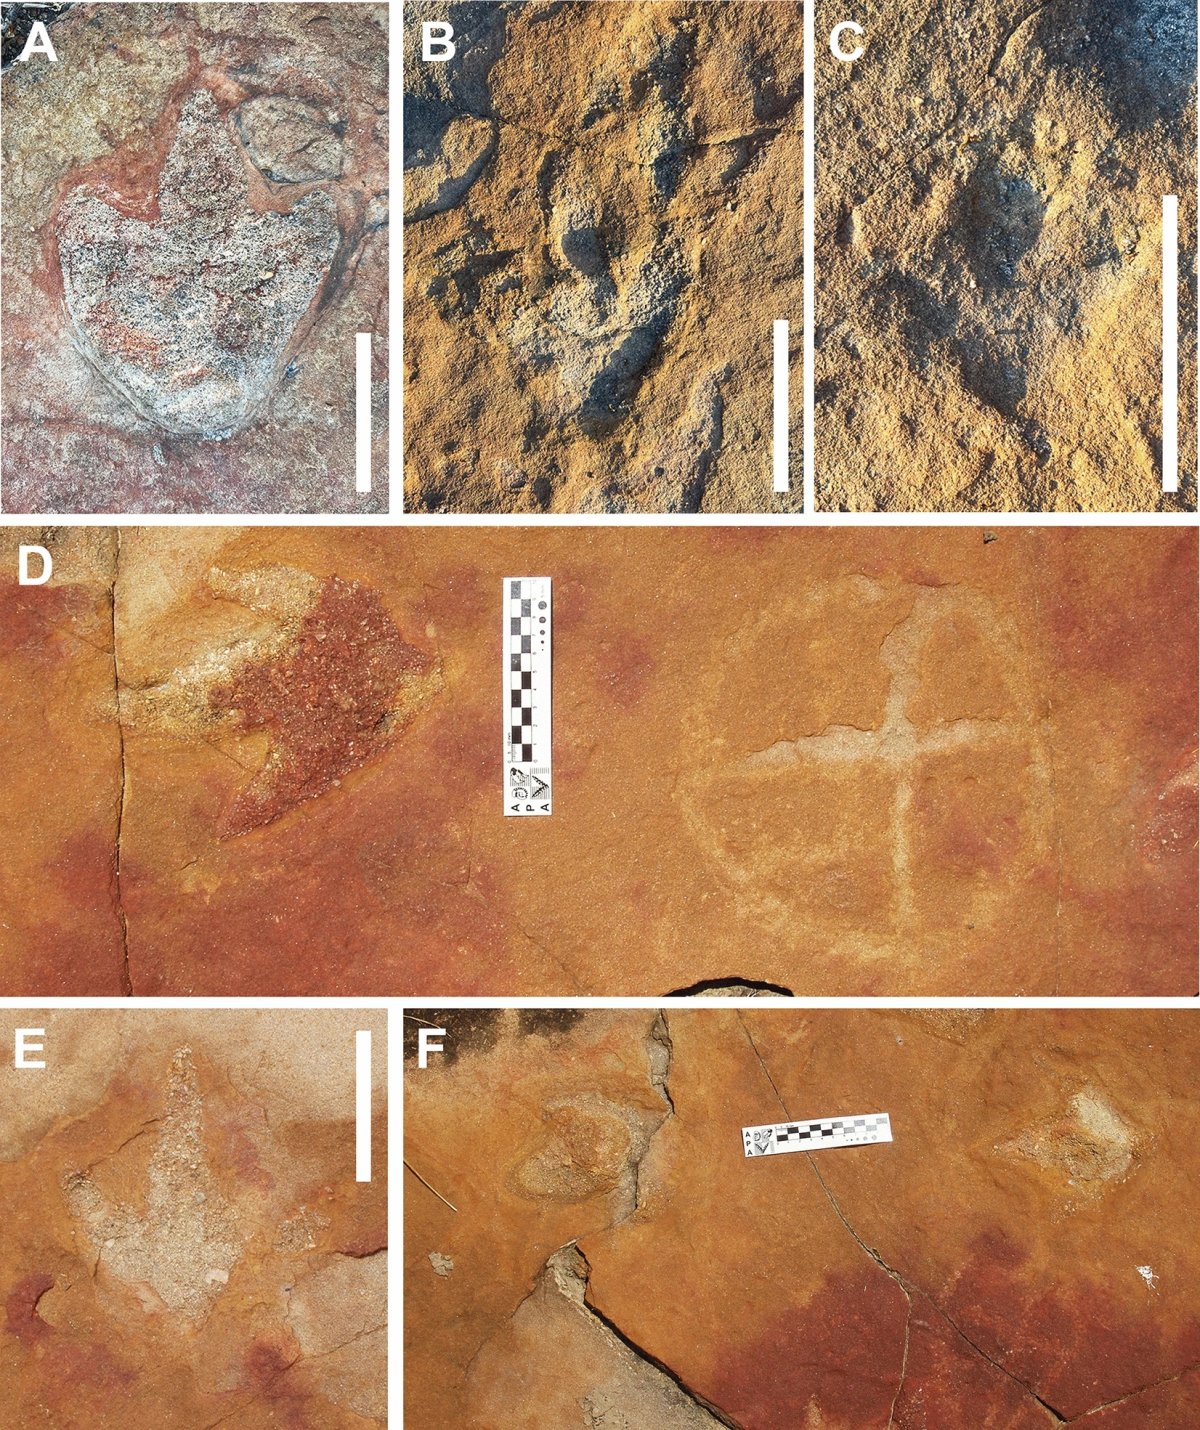 Dinosaur footprints and petroglyphs